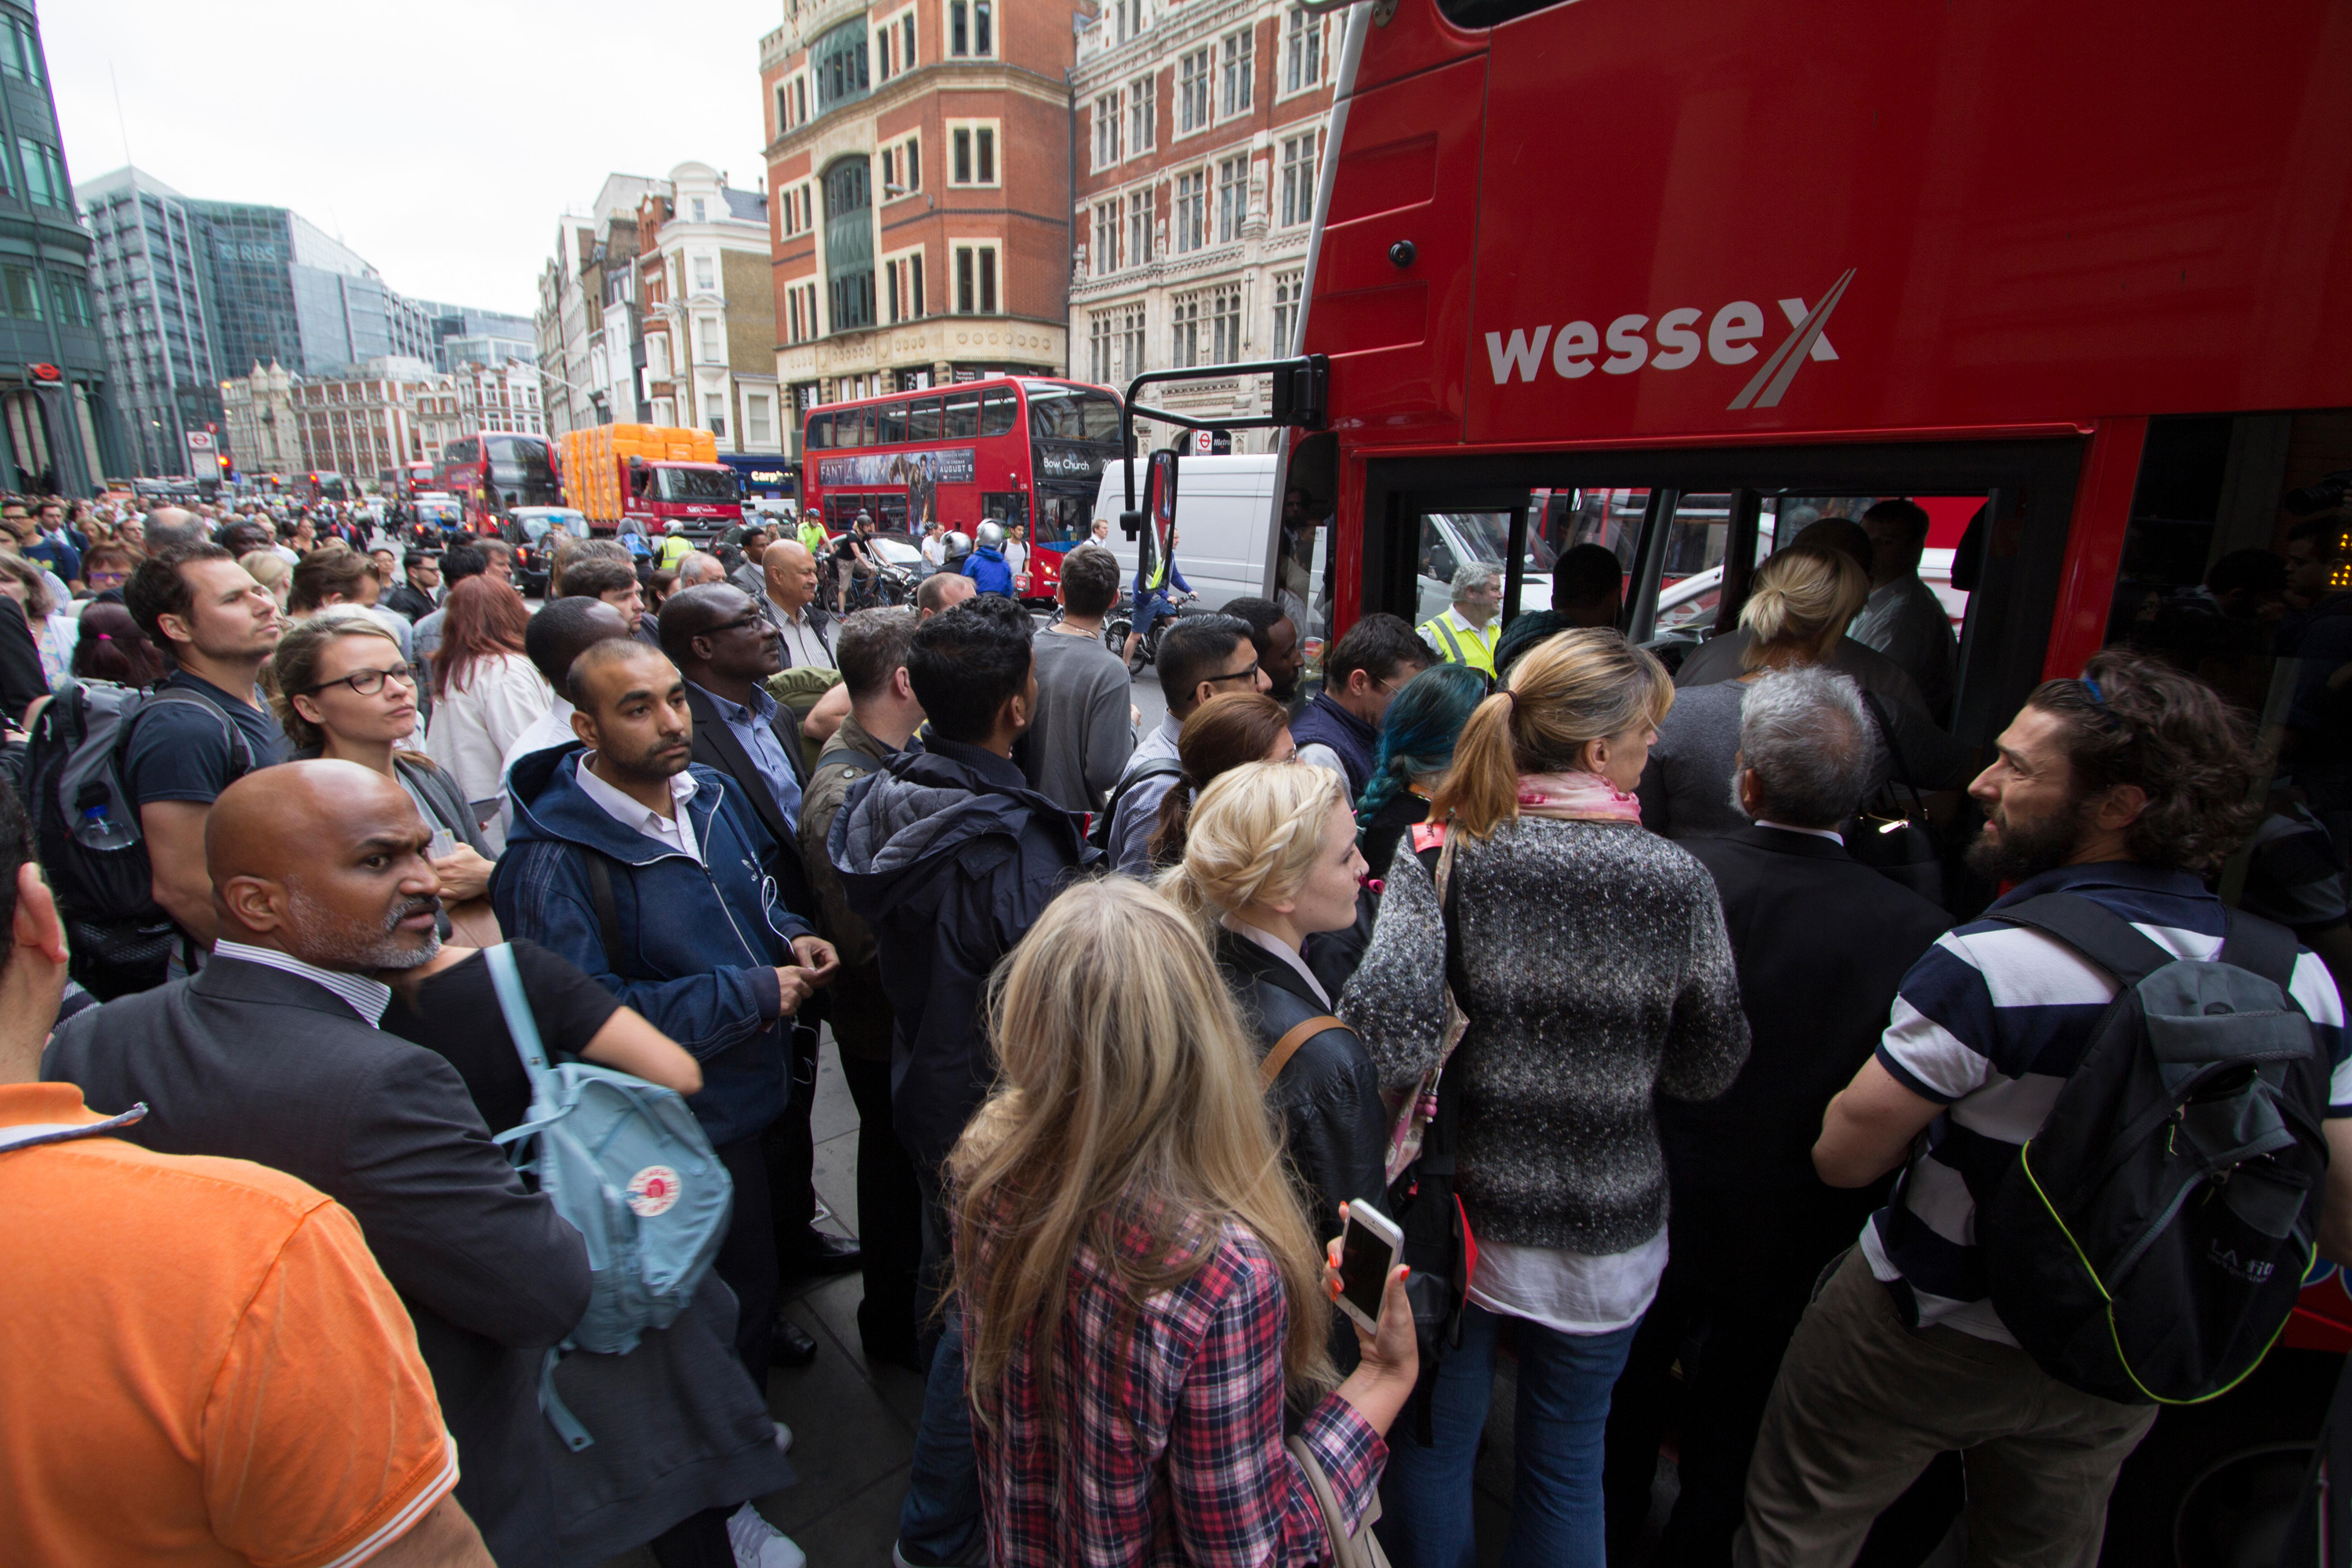 Bus queues during london underground tube strike